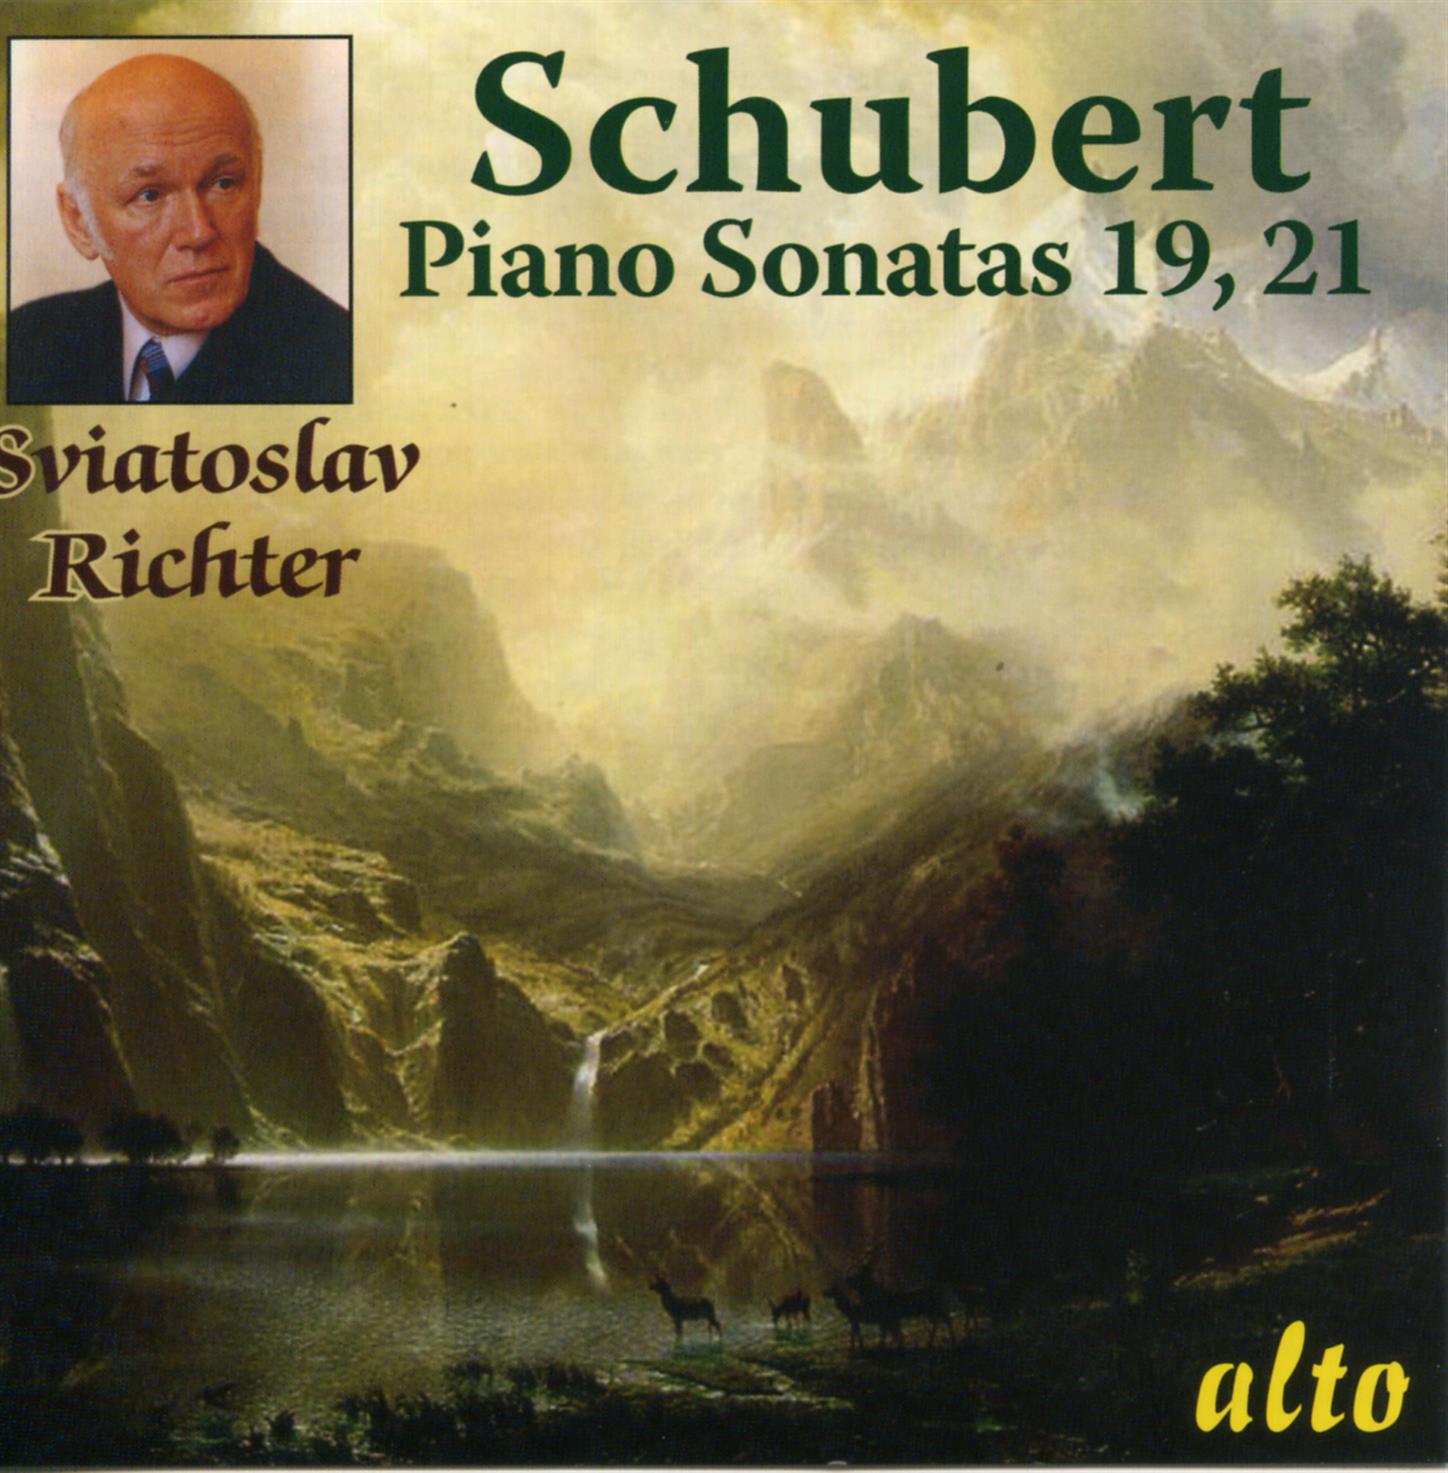 Piano Sonata No. 19 in C minor, Op.posth. (D958): IV. Allegro